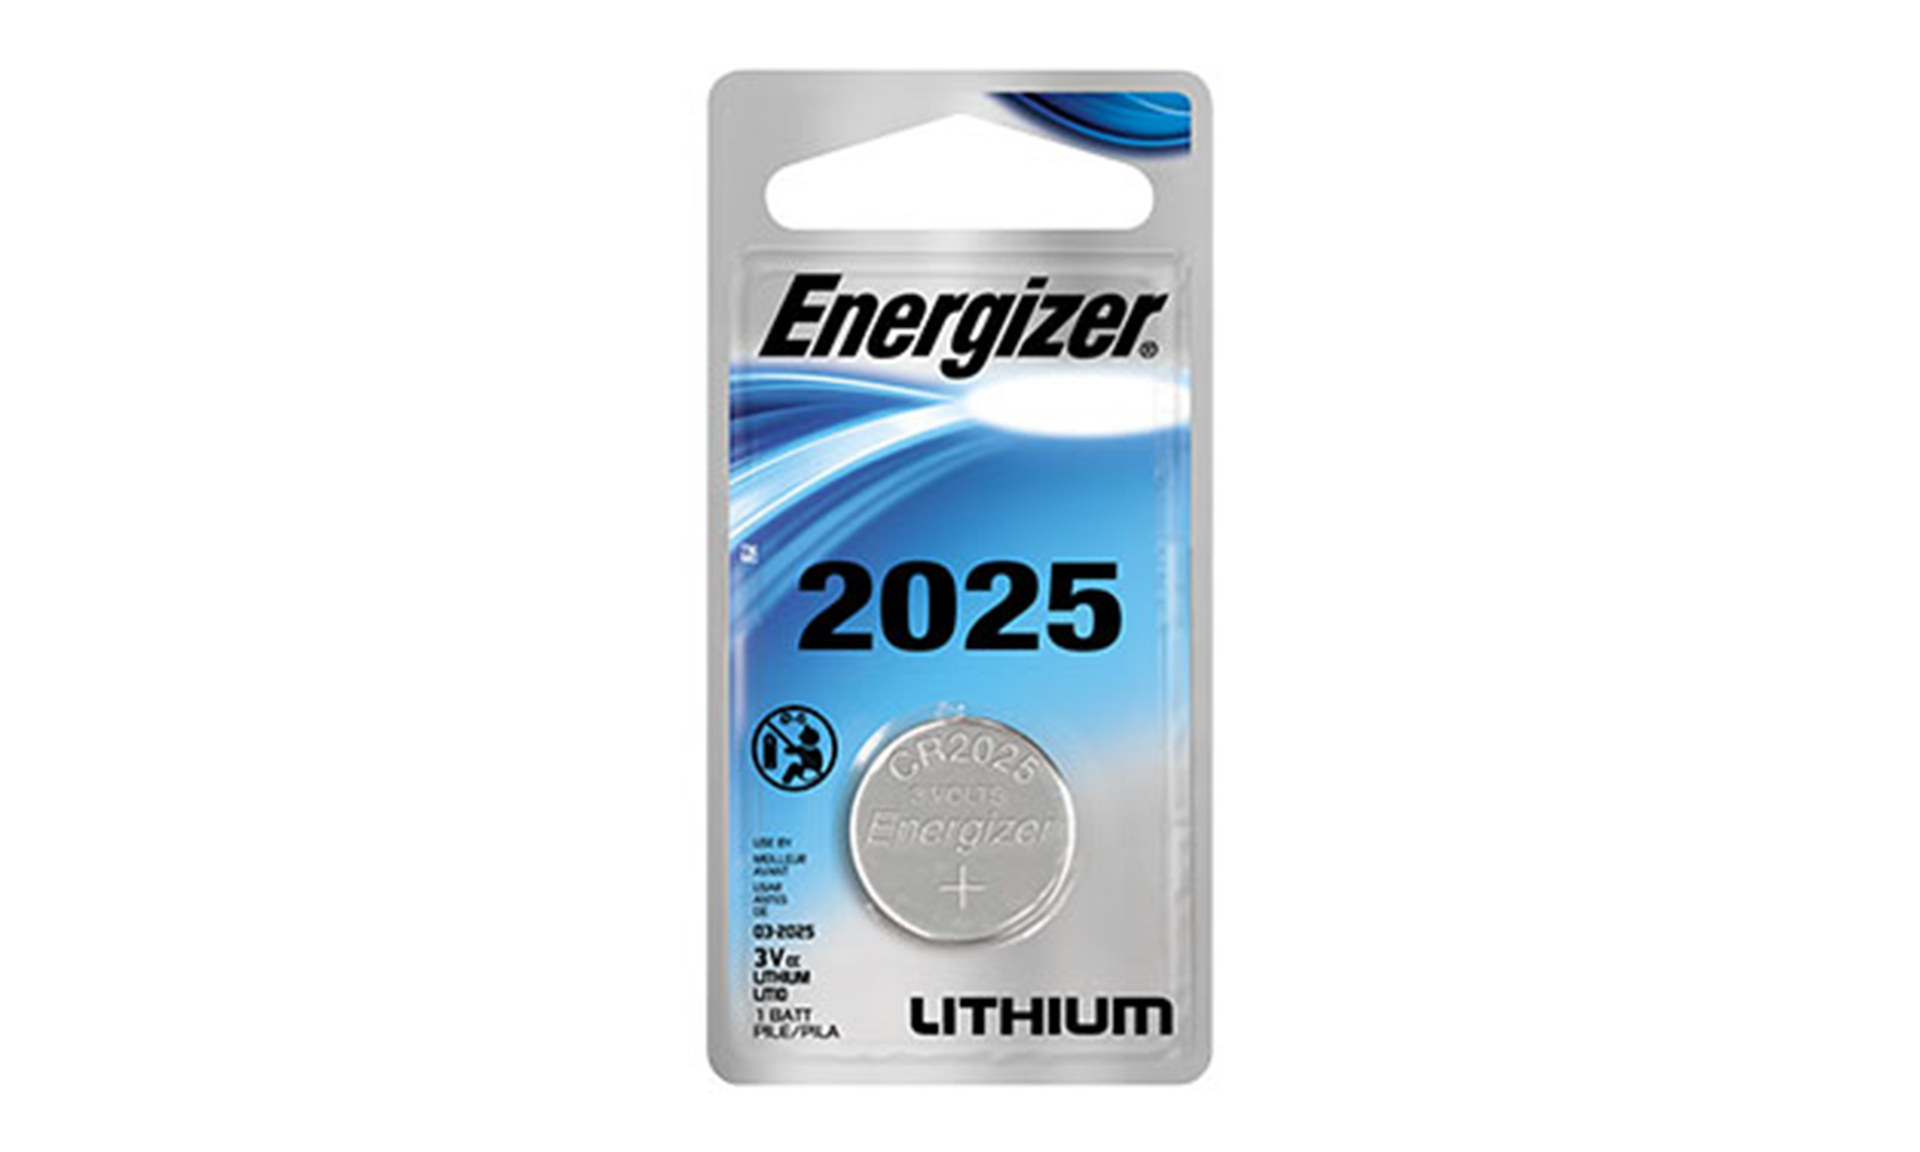 Energizer ECR2025 Battery 3V Lithium Coin Cell (1PC Blister Pack) (Child Resistant Packaging)